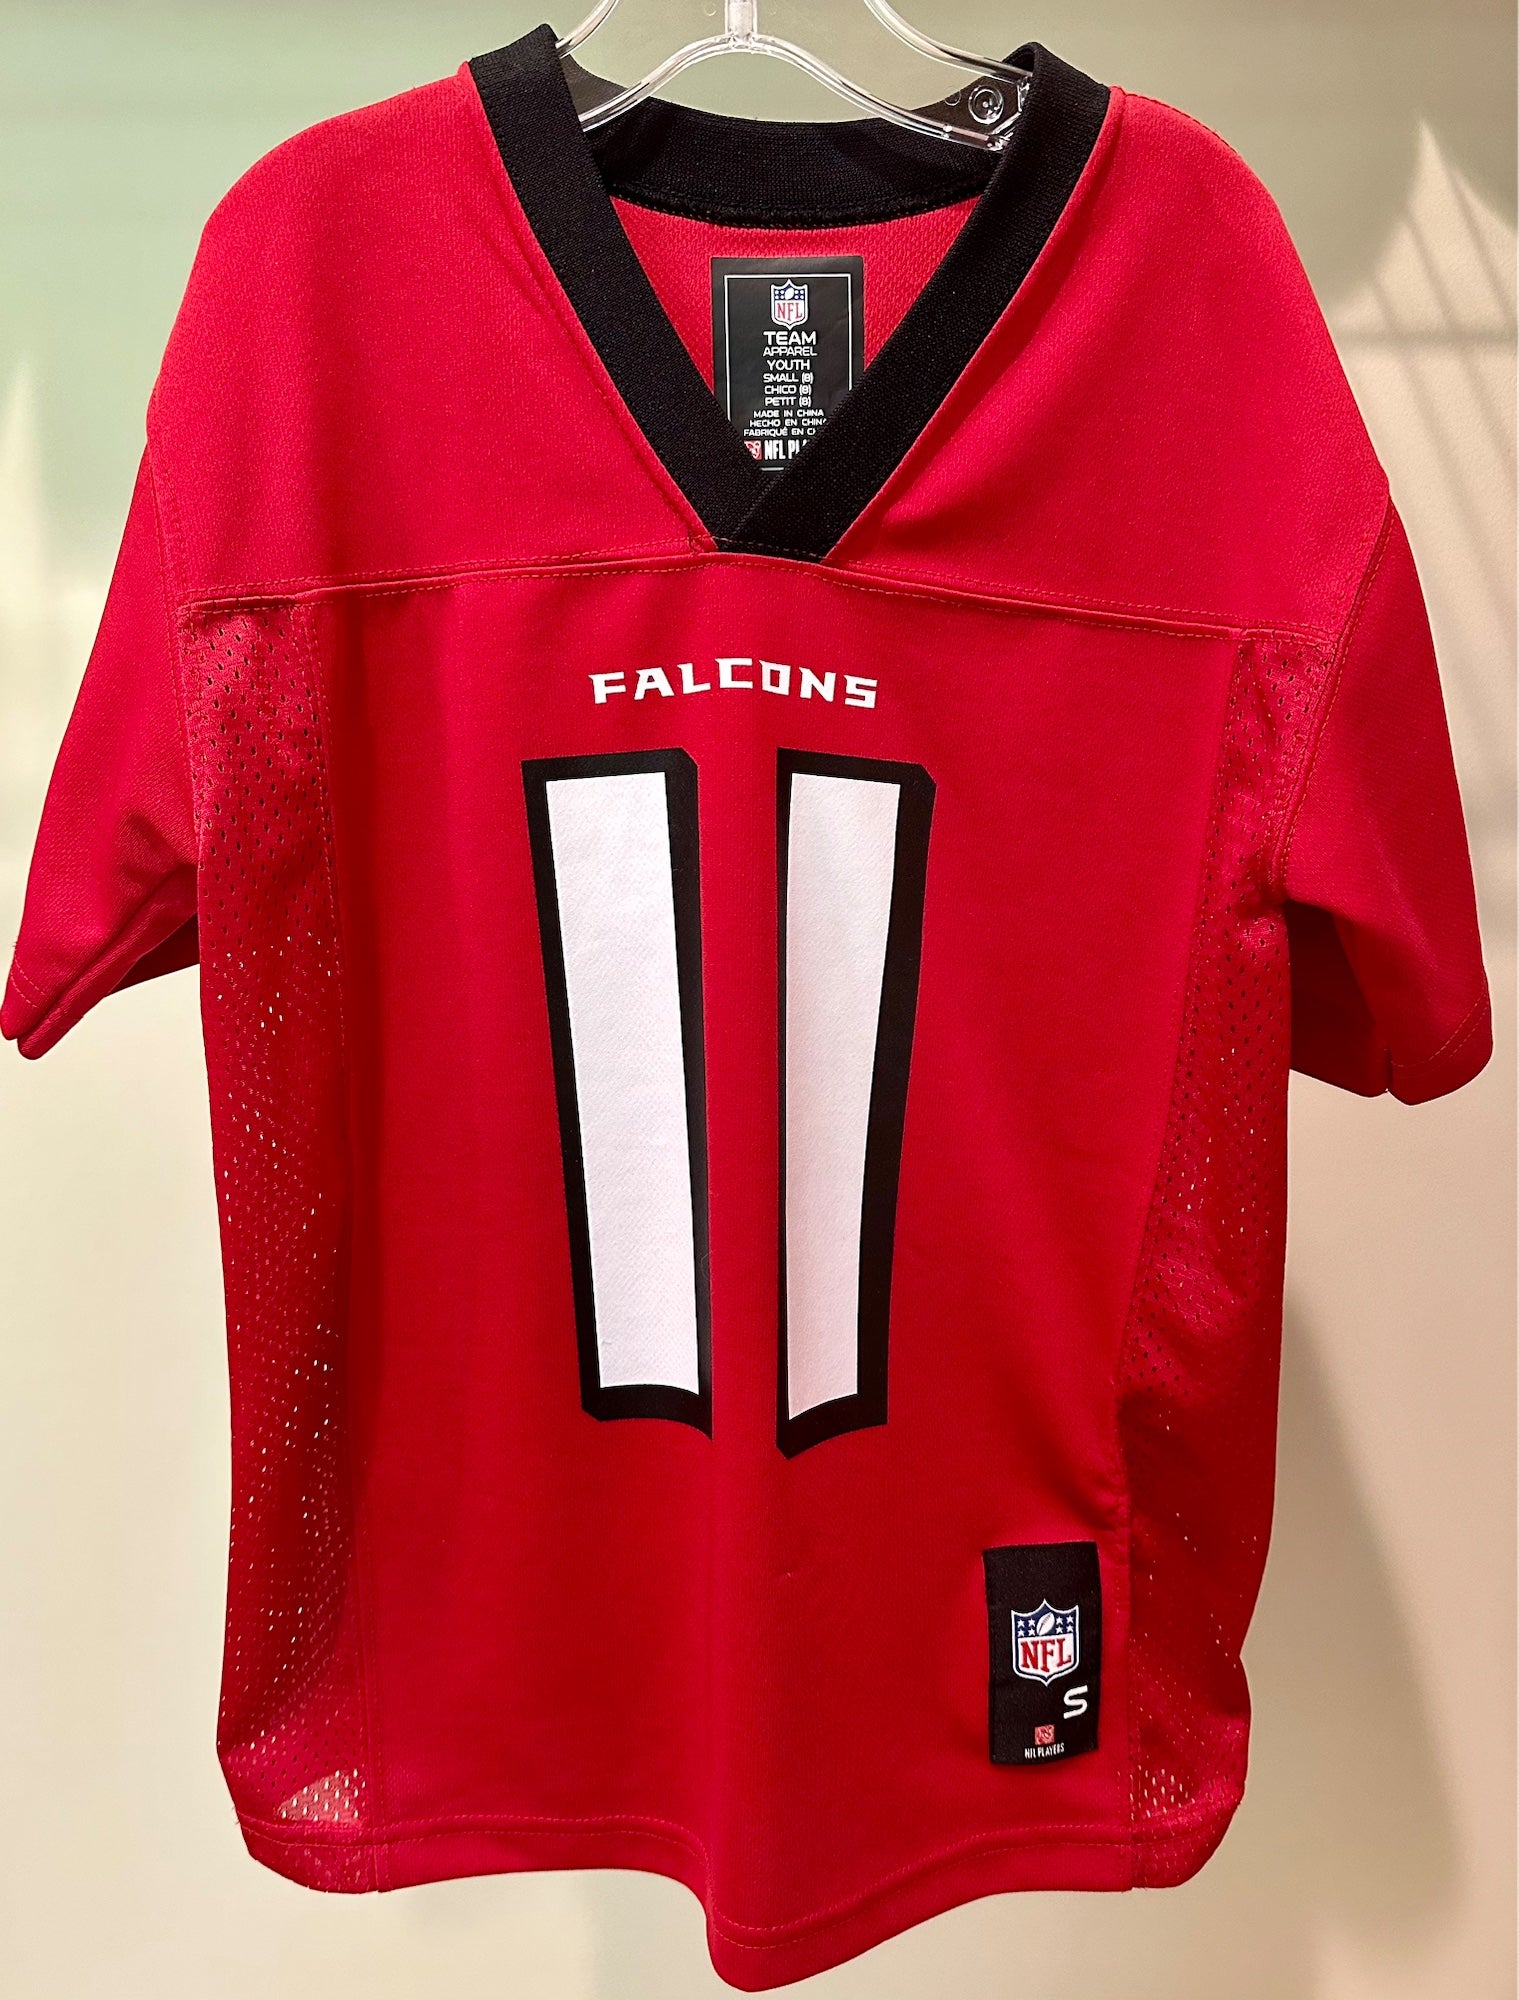 Falcons toddler jersey